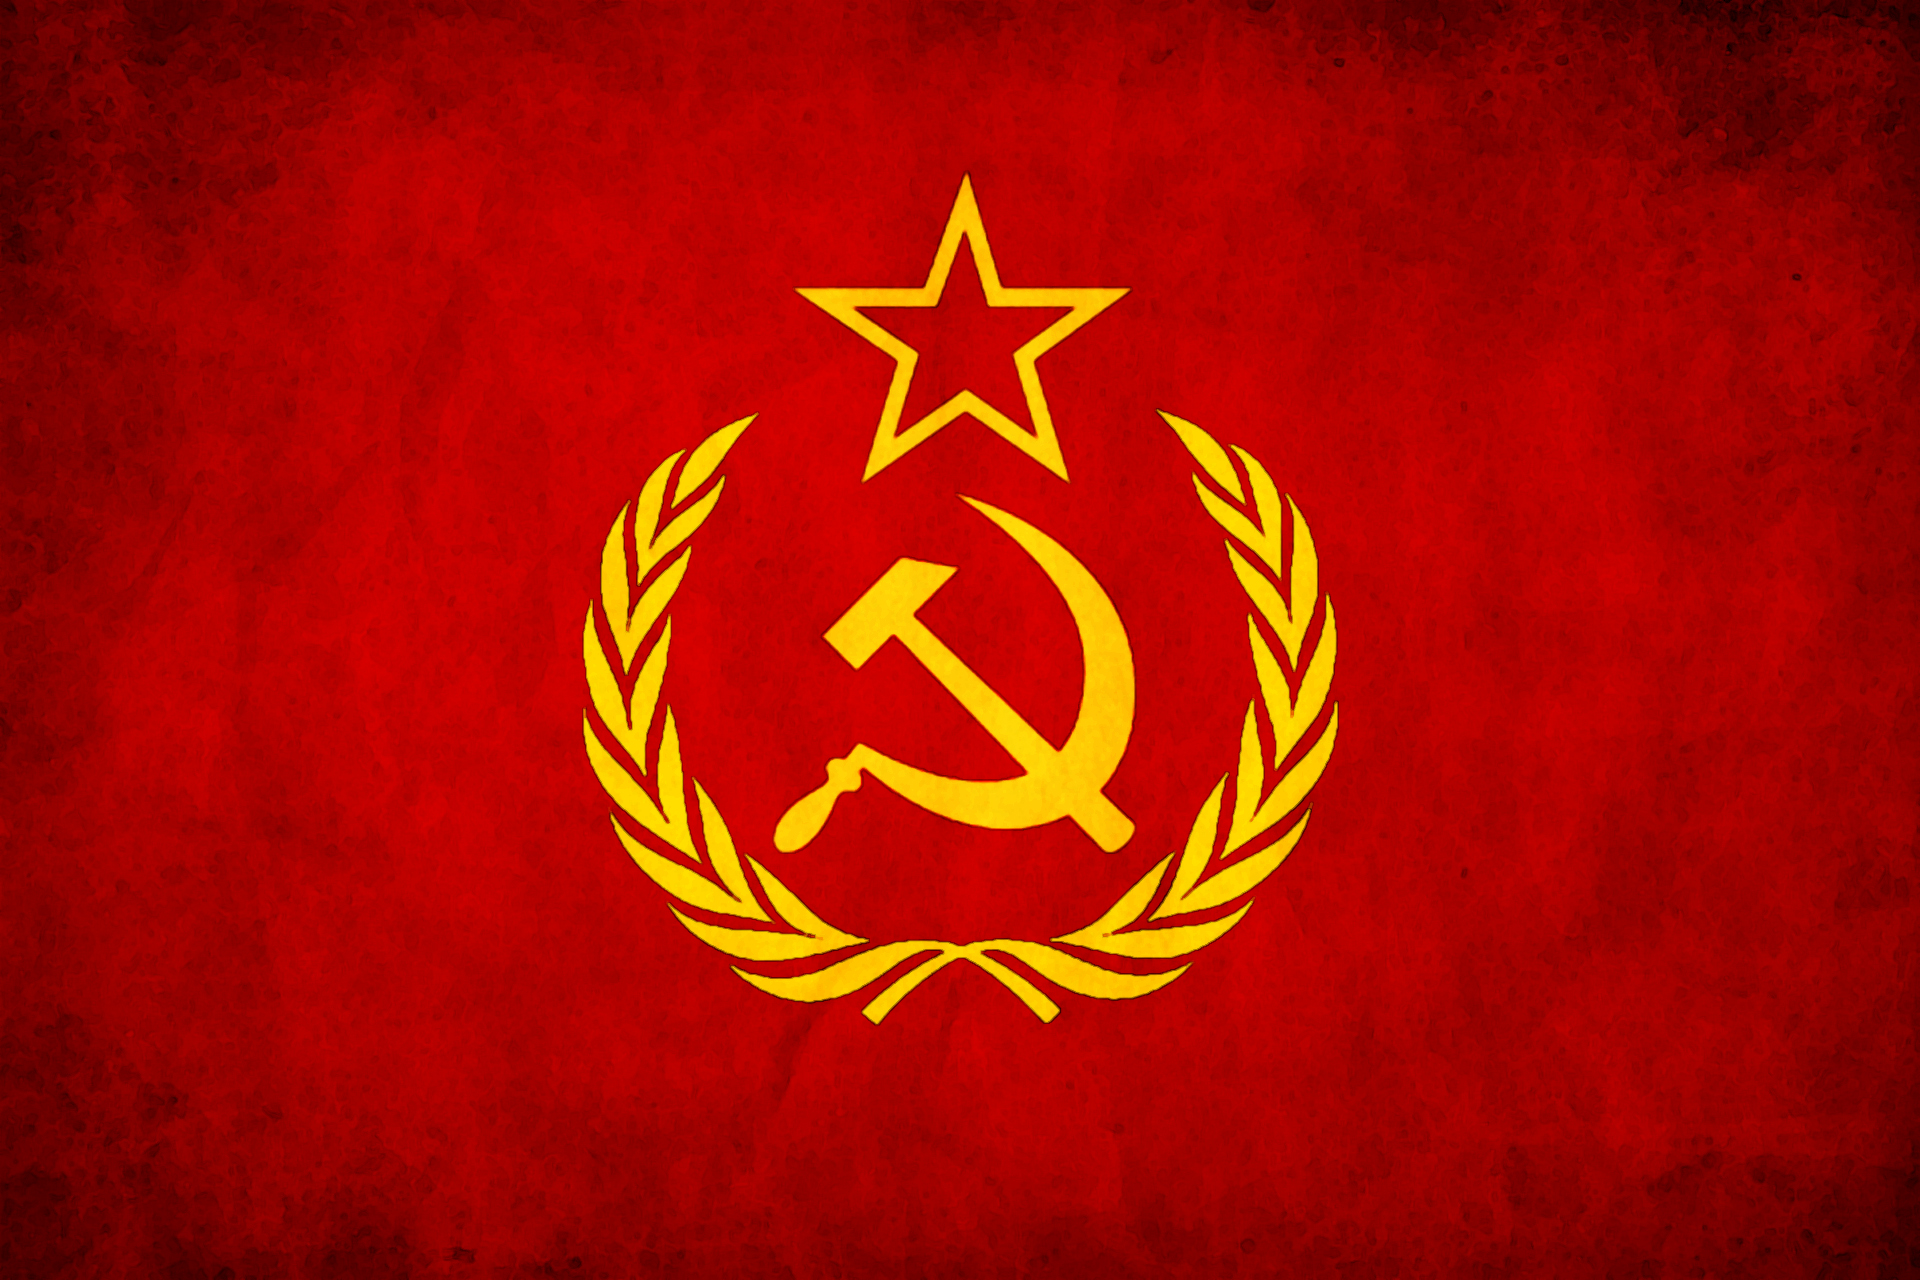 Man Made Communism HD Wallpaper | Background Image